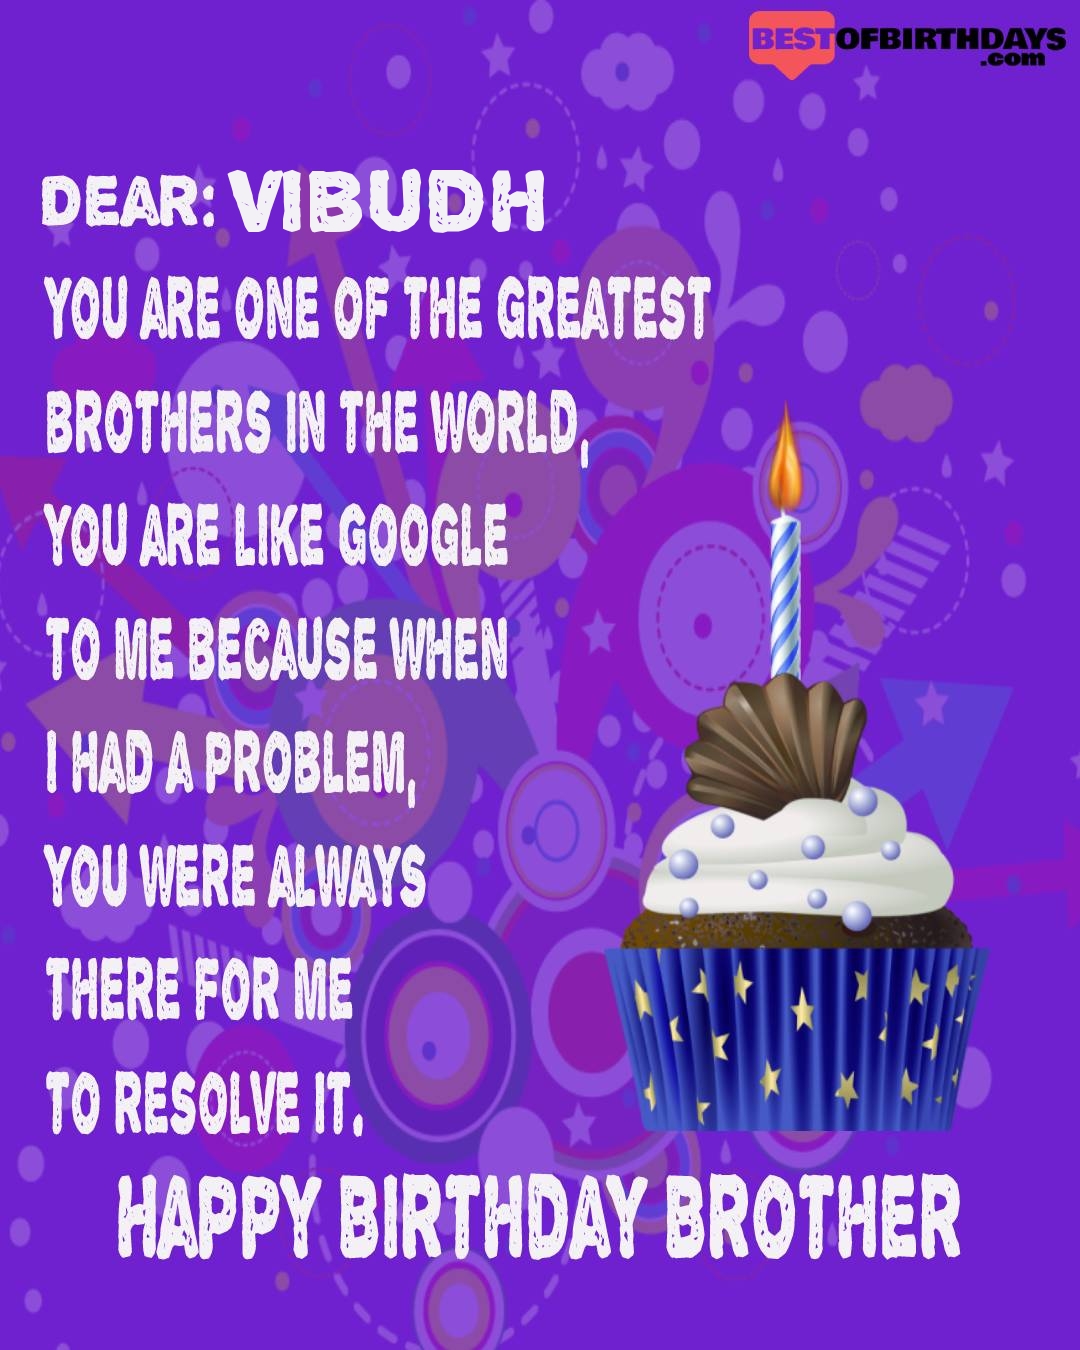 Happy birthday vibudh bhai brother bro